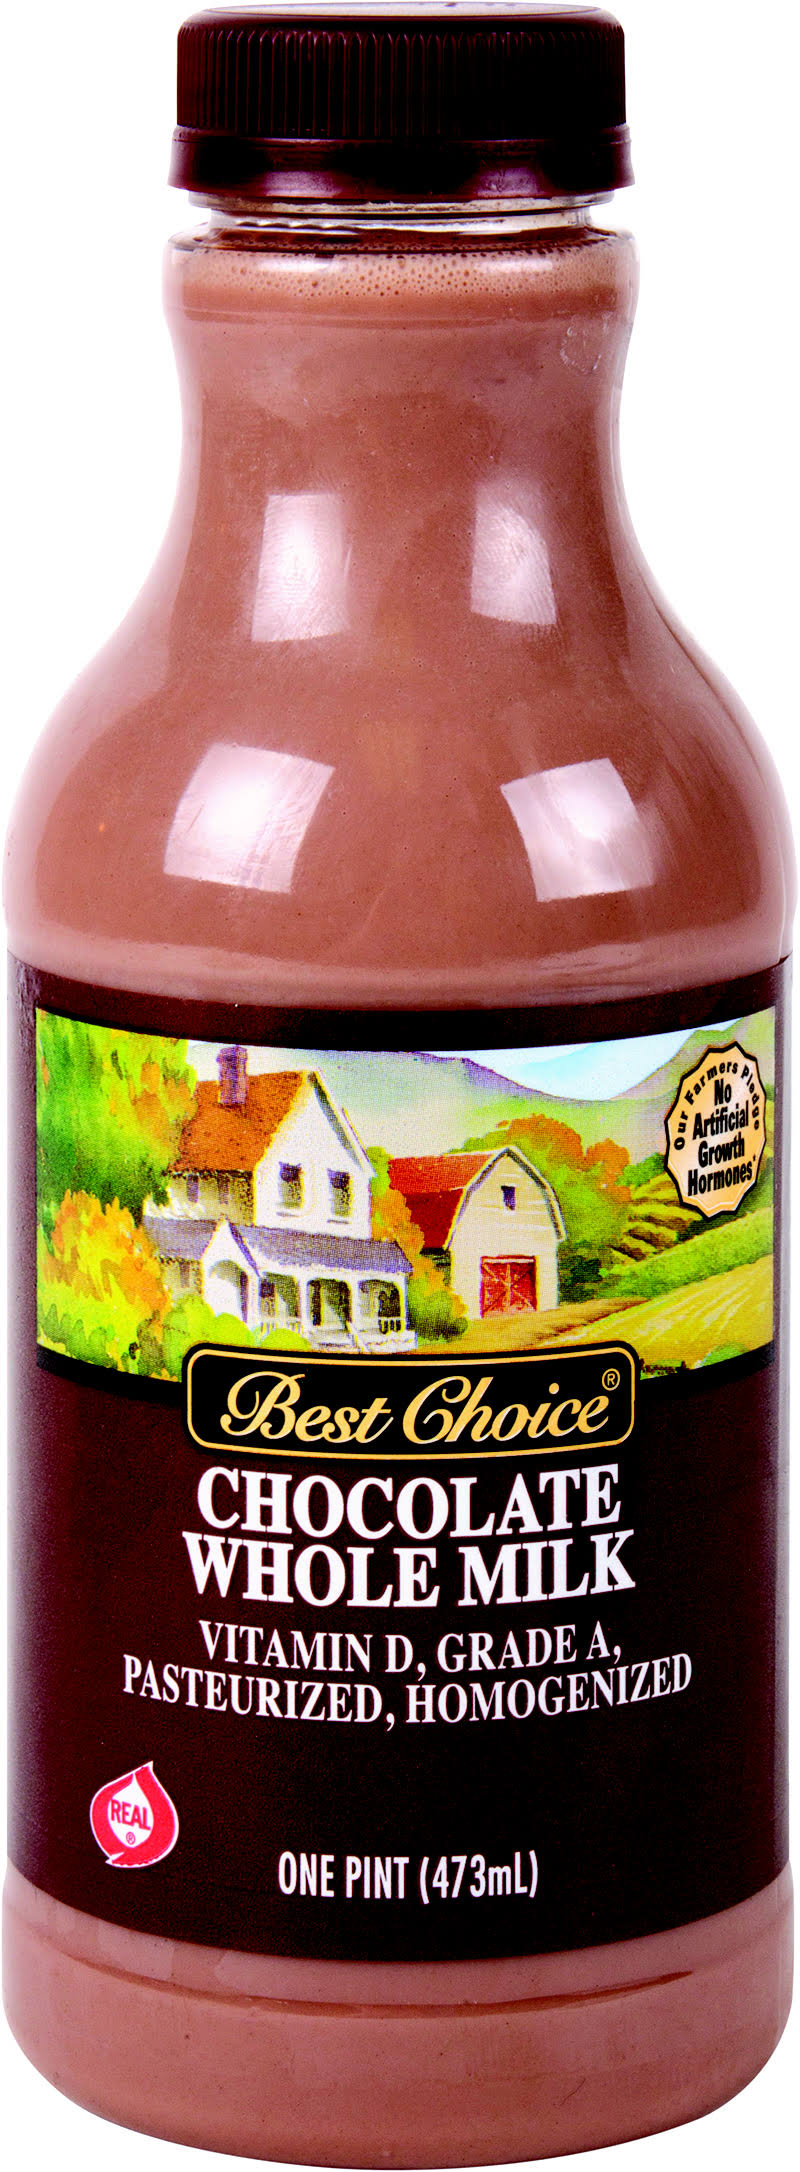 Best Choice Chocolate Whole Milk